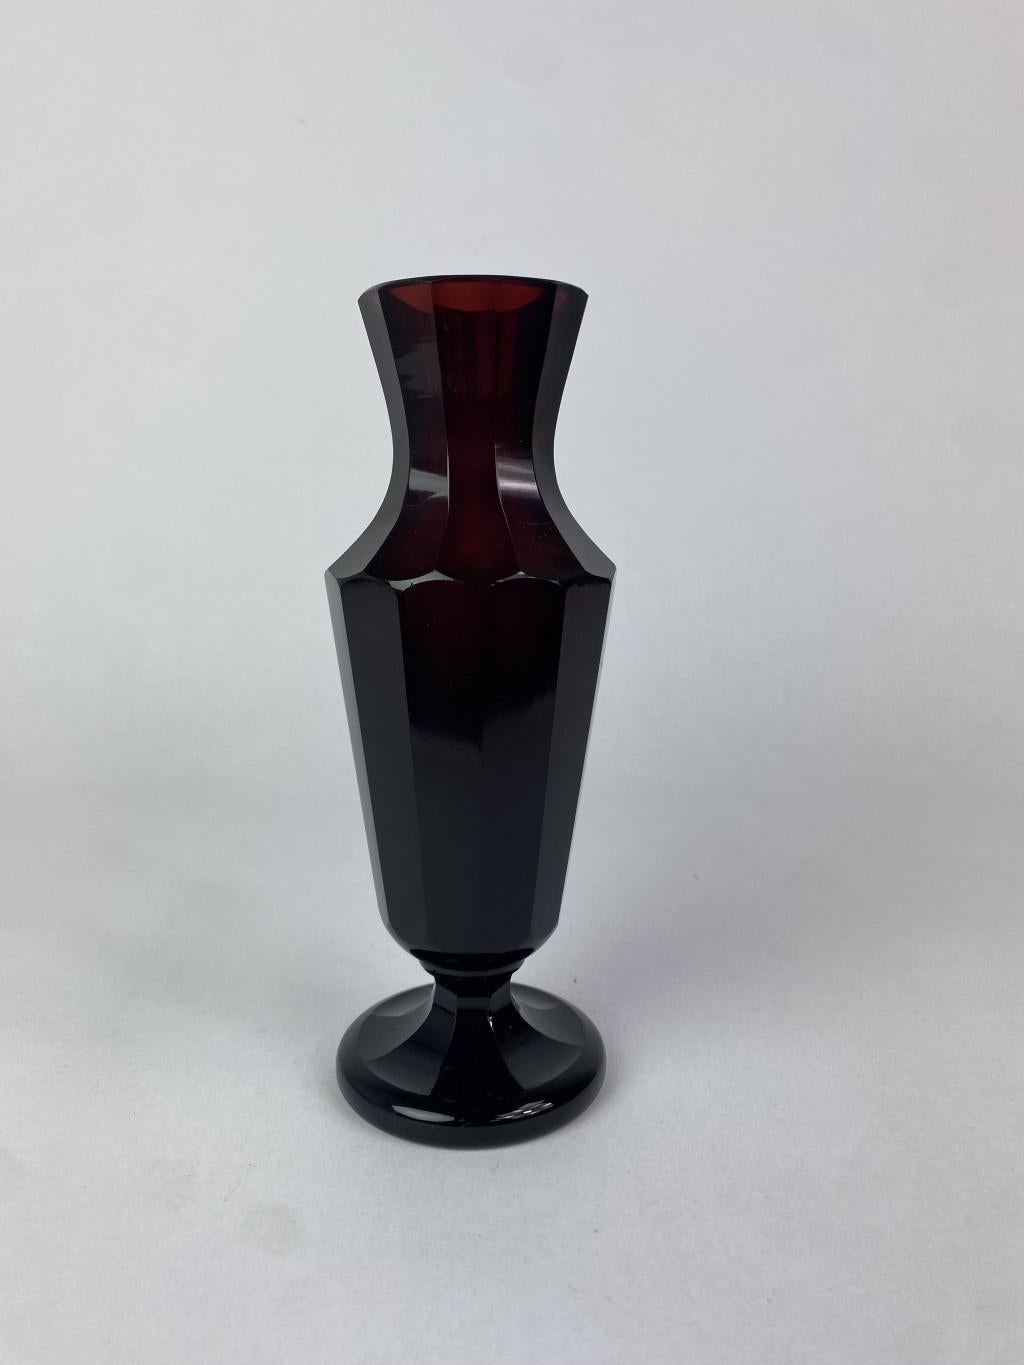 josef hoffmann glass vase